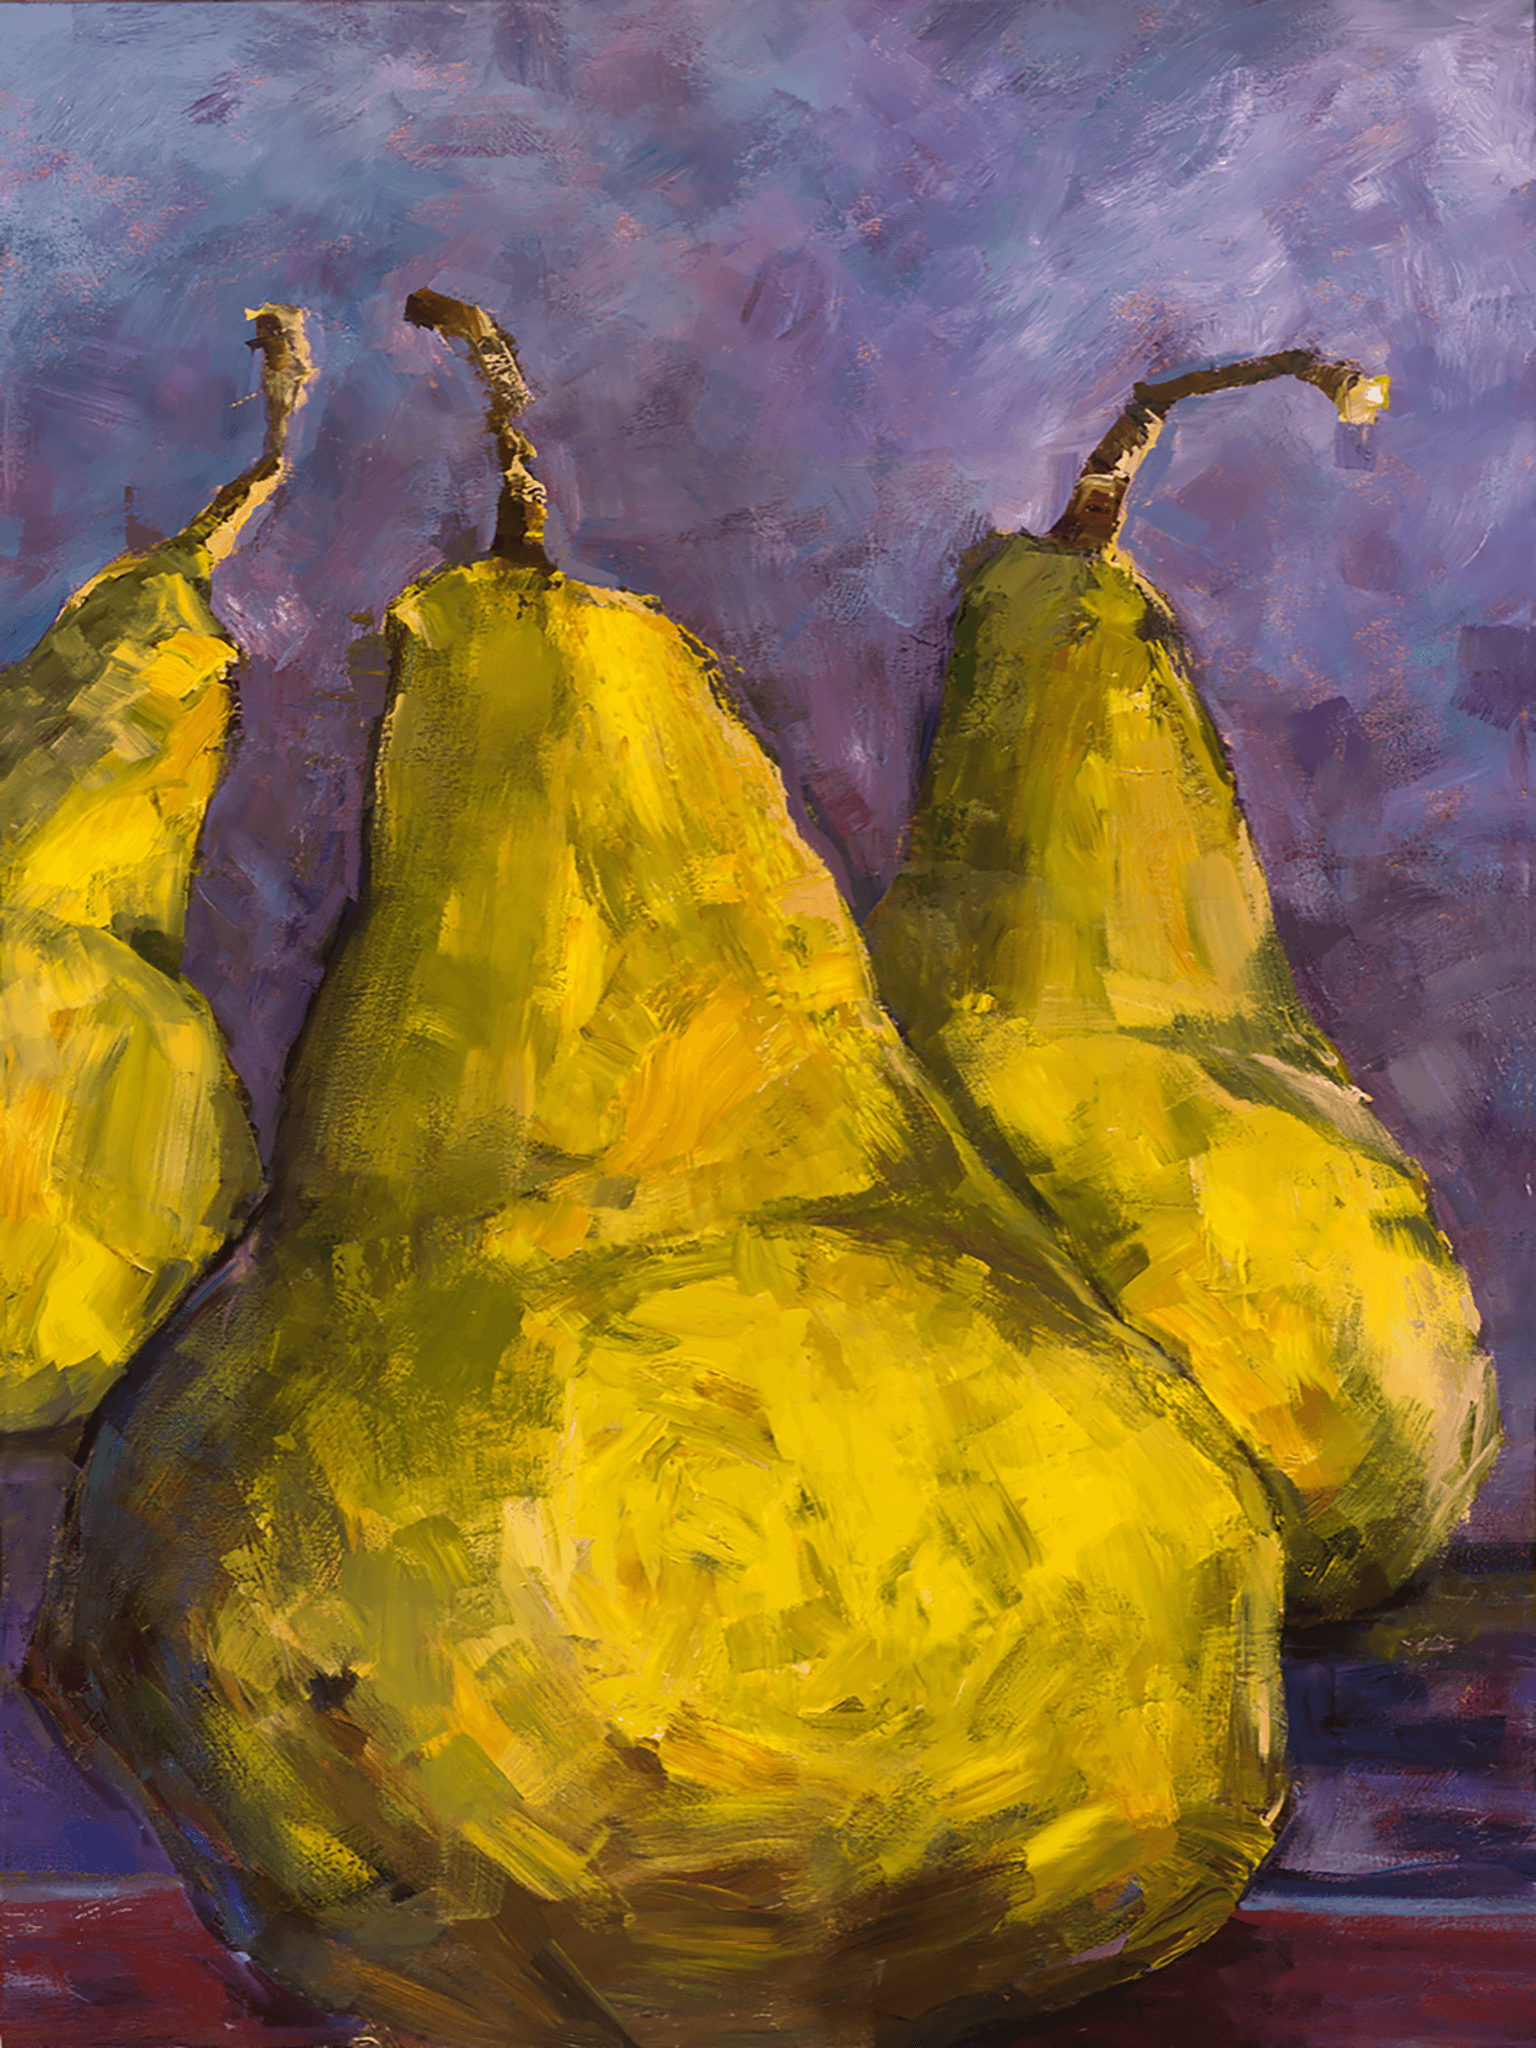 Realism Art Pears With Purple John Beard Collection